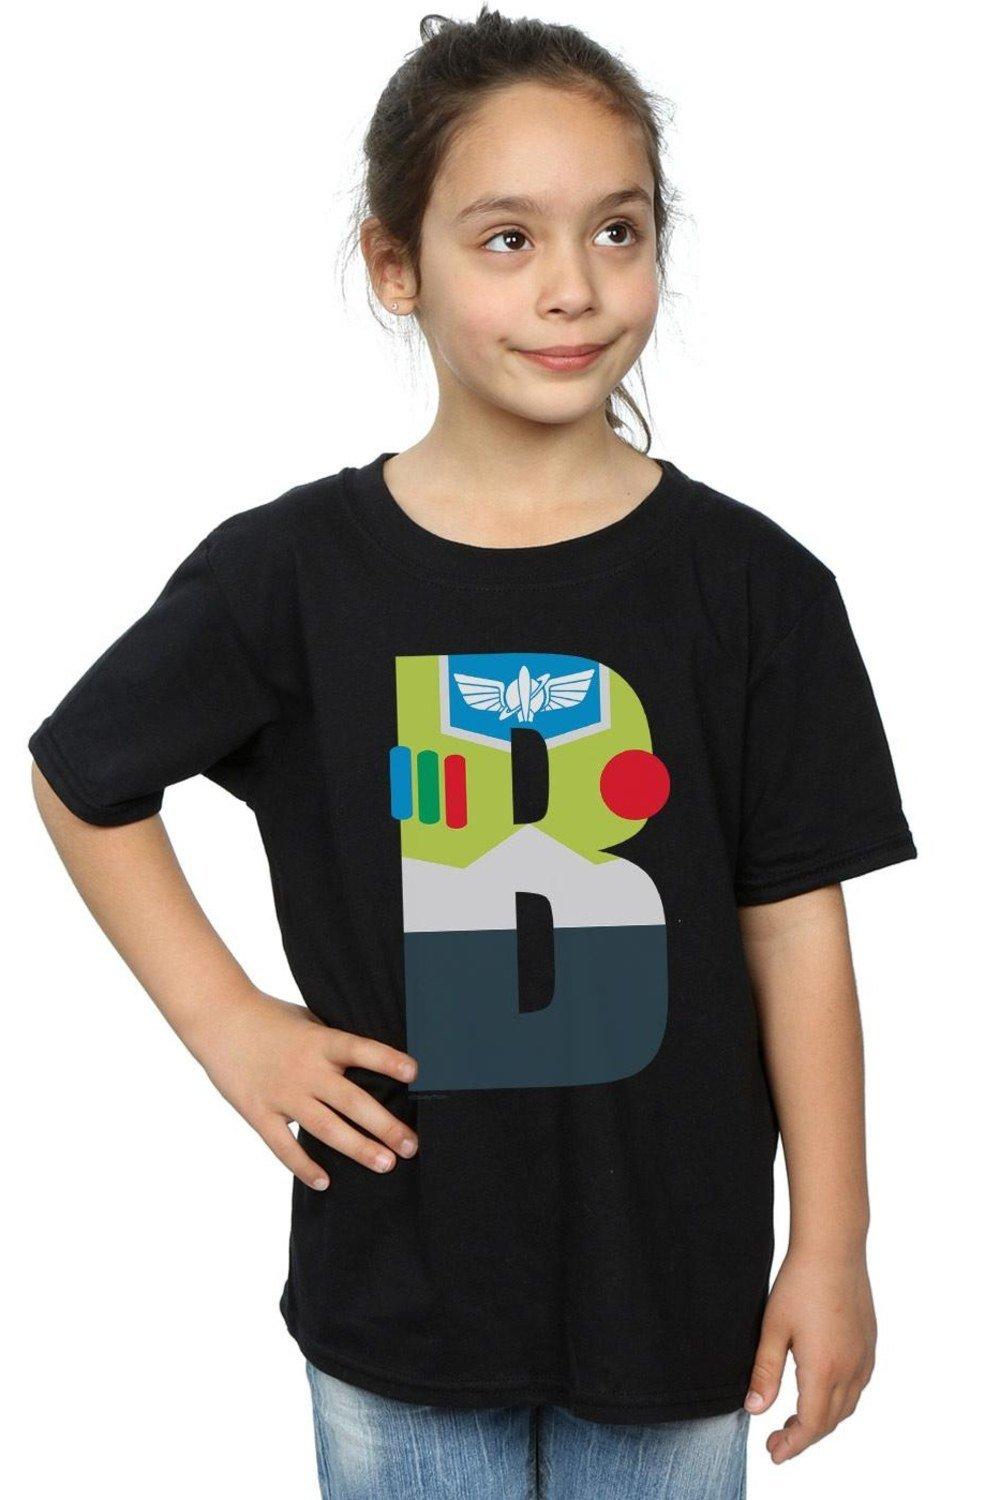 Alphabet B Is For Buzz Lightyear Cotton T-Shirt